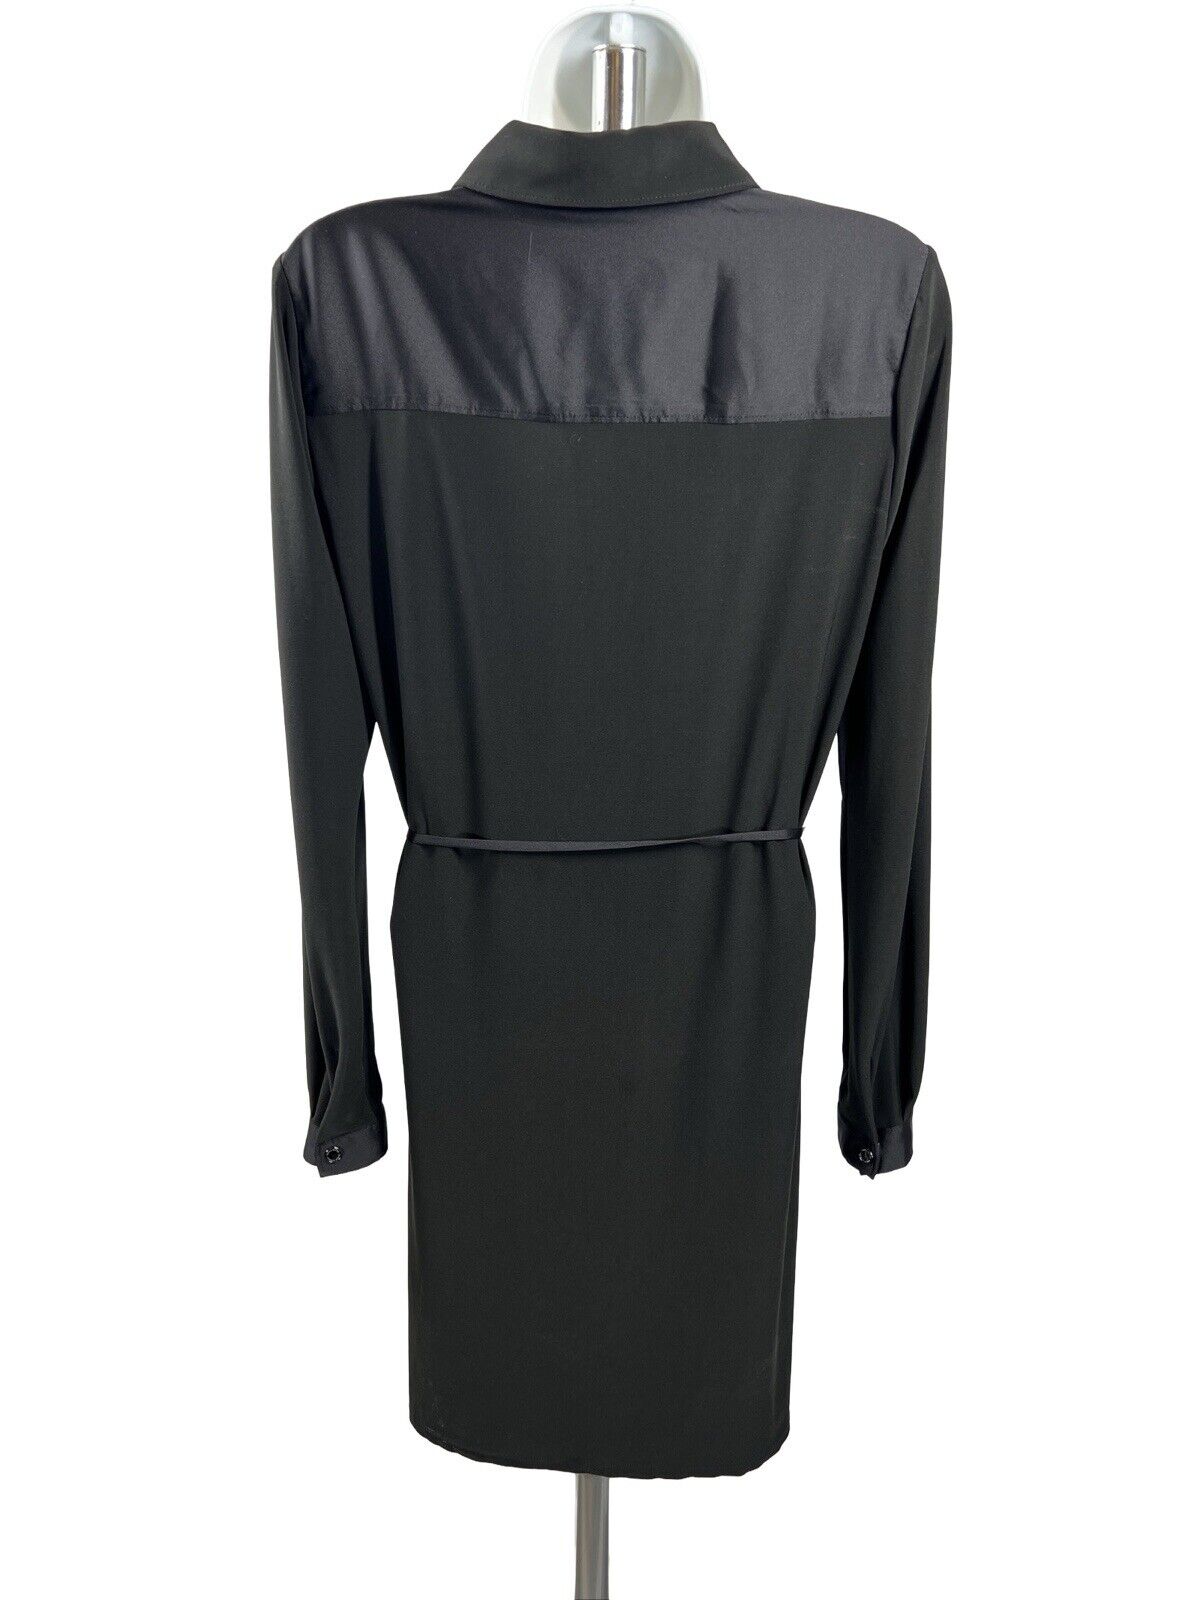 NEW White House Black Market Women's Black Long Sleeve MJ Shirt Dress - M